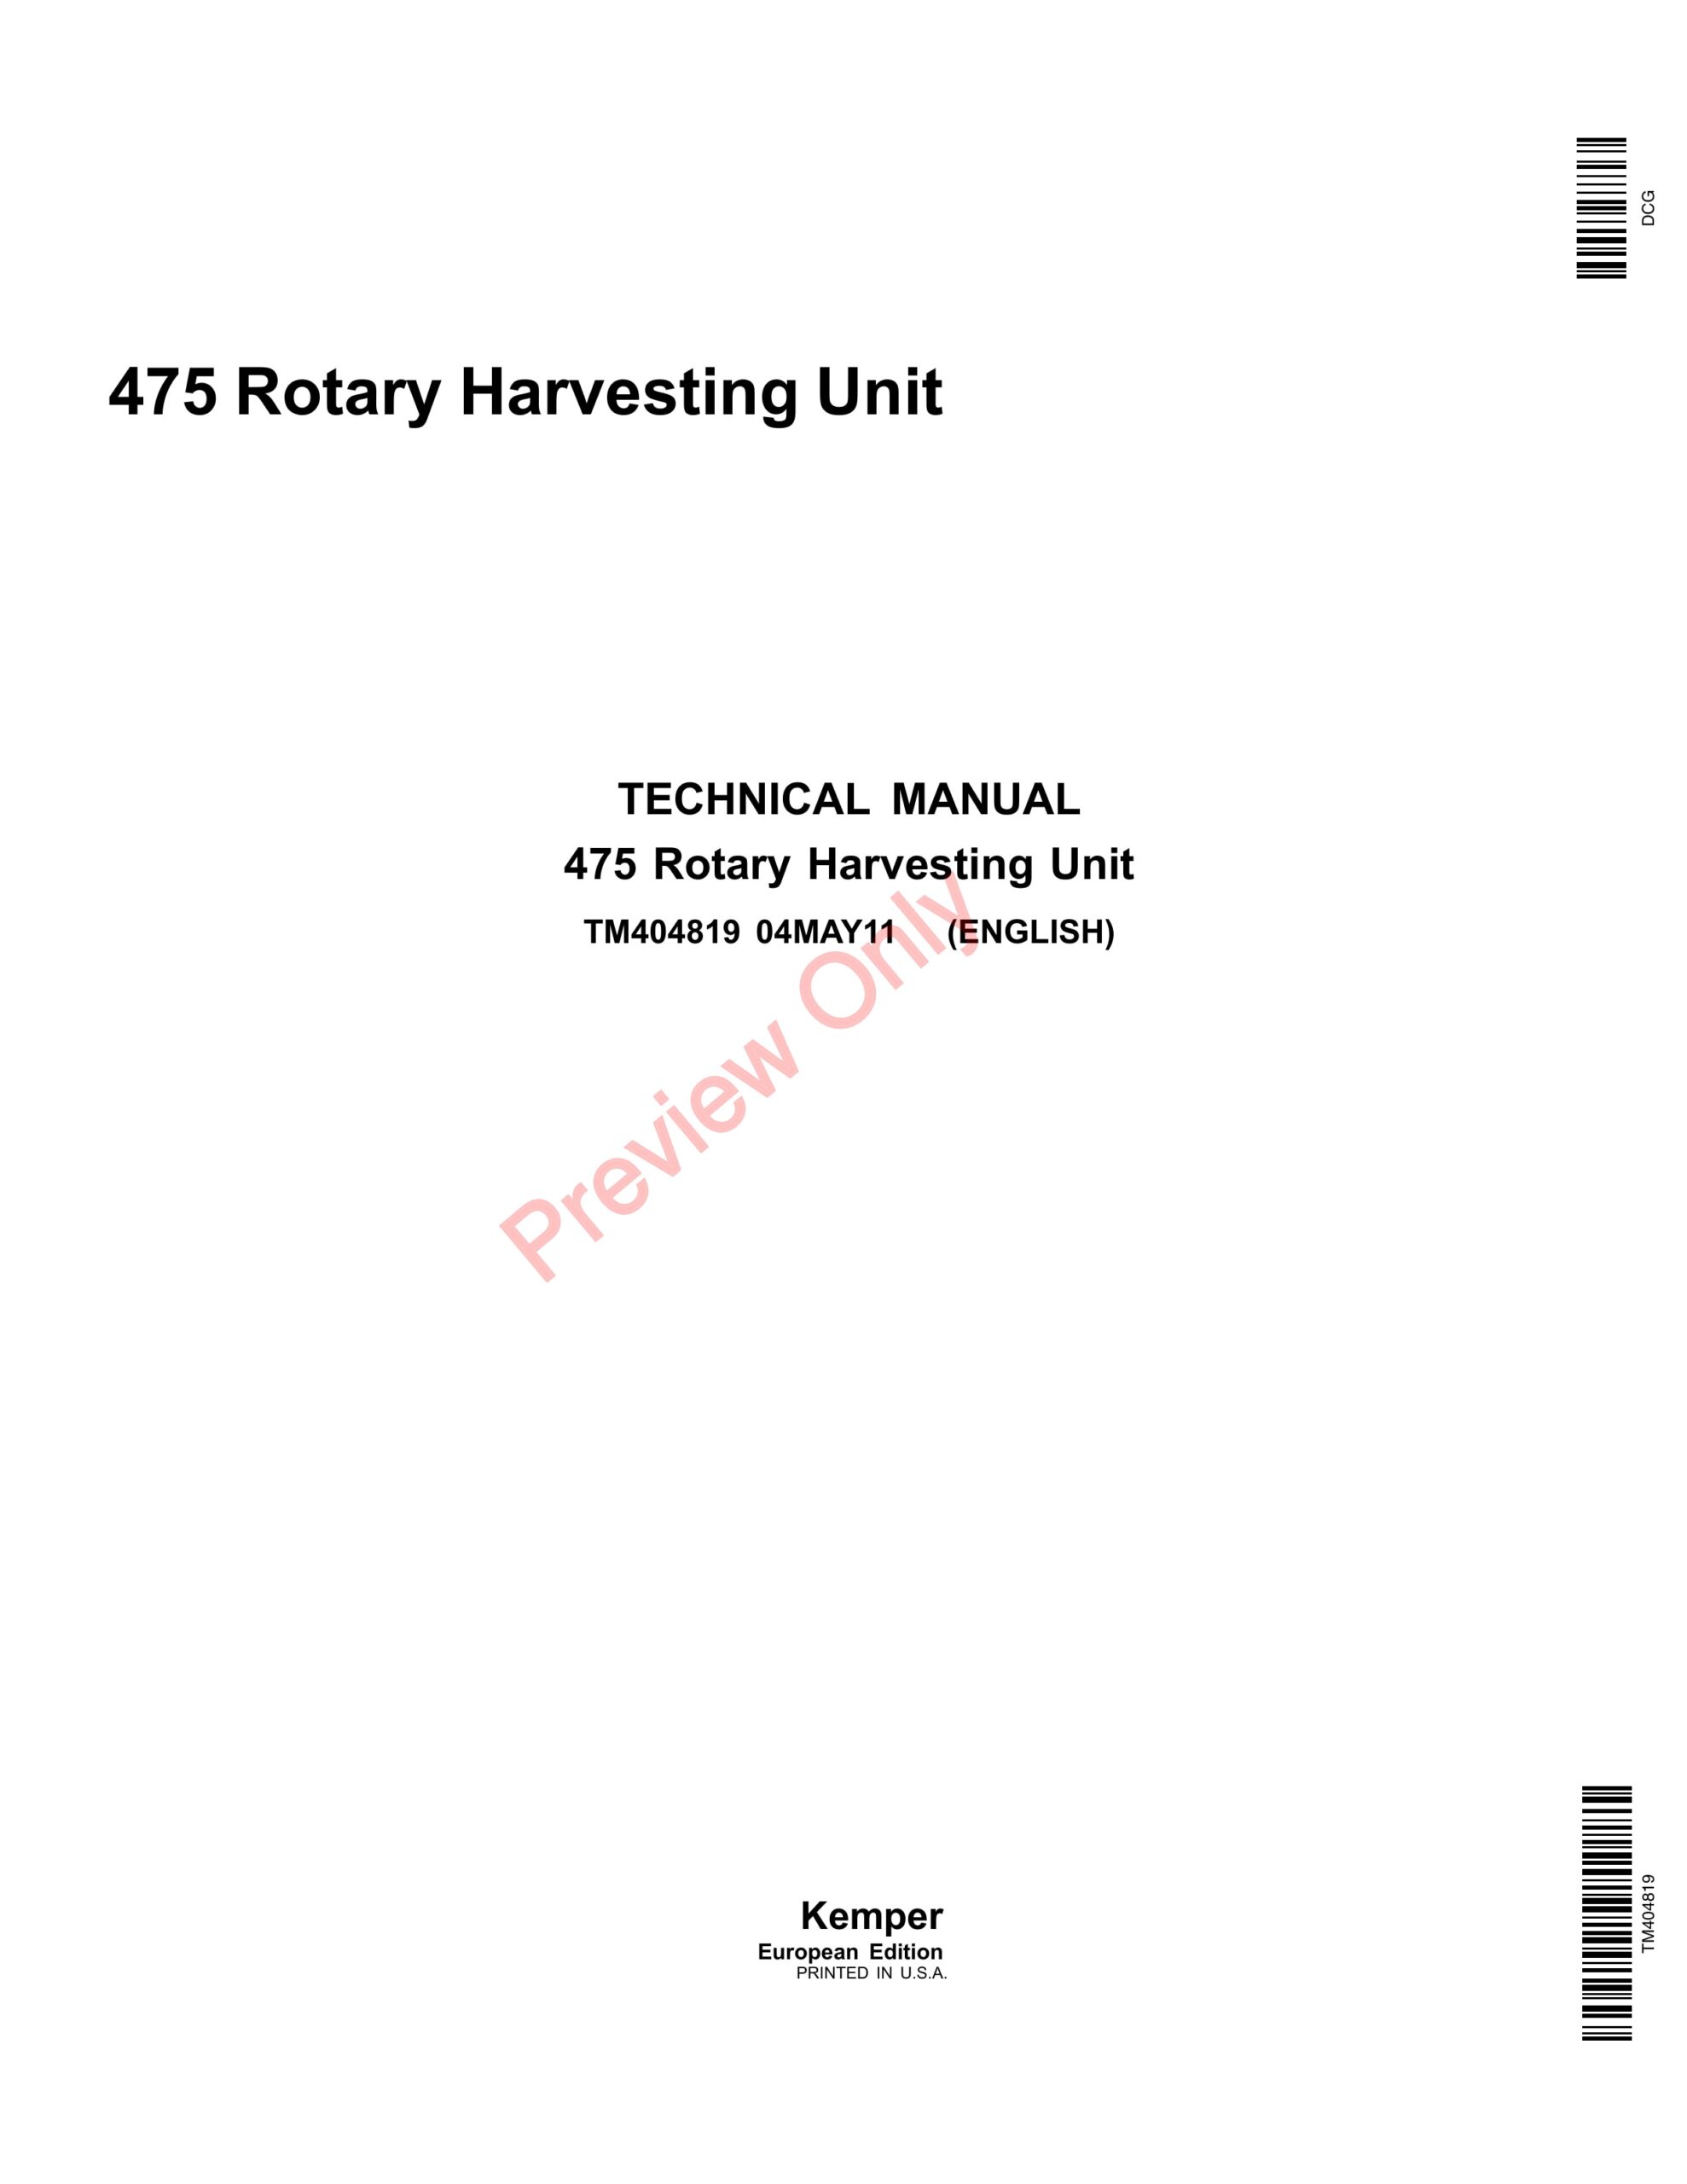 John Deere 475 Rotary Harvesting Units Technical Manual TM404819 04MAY11-1